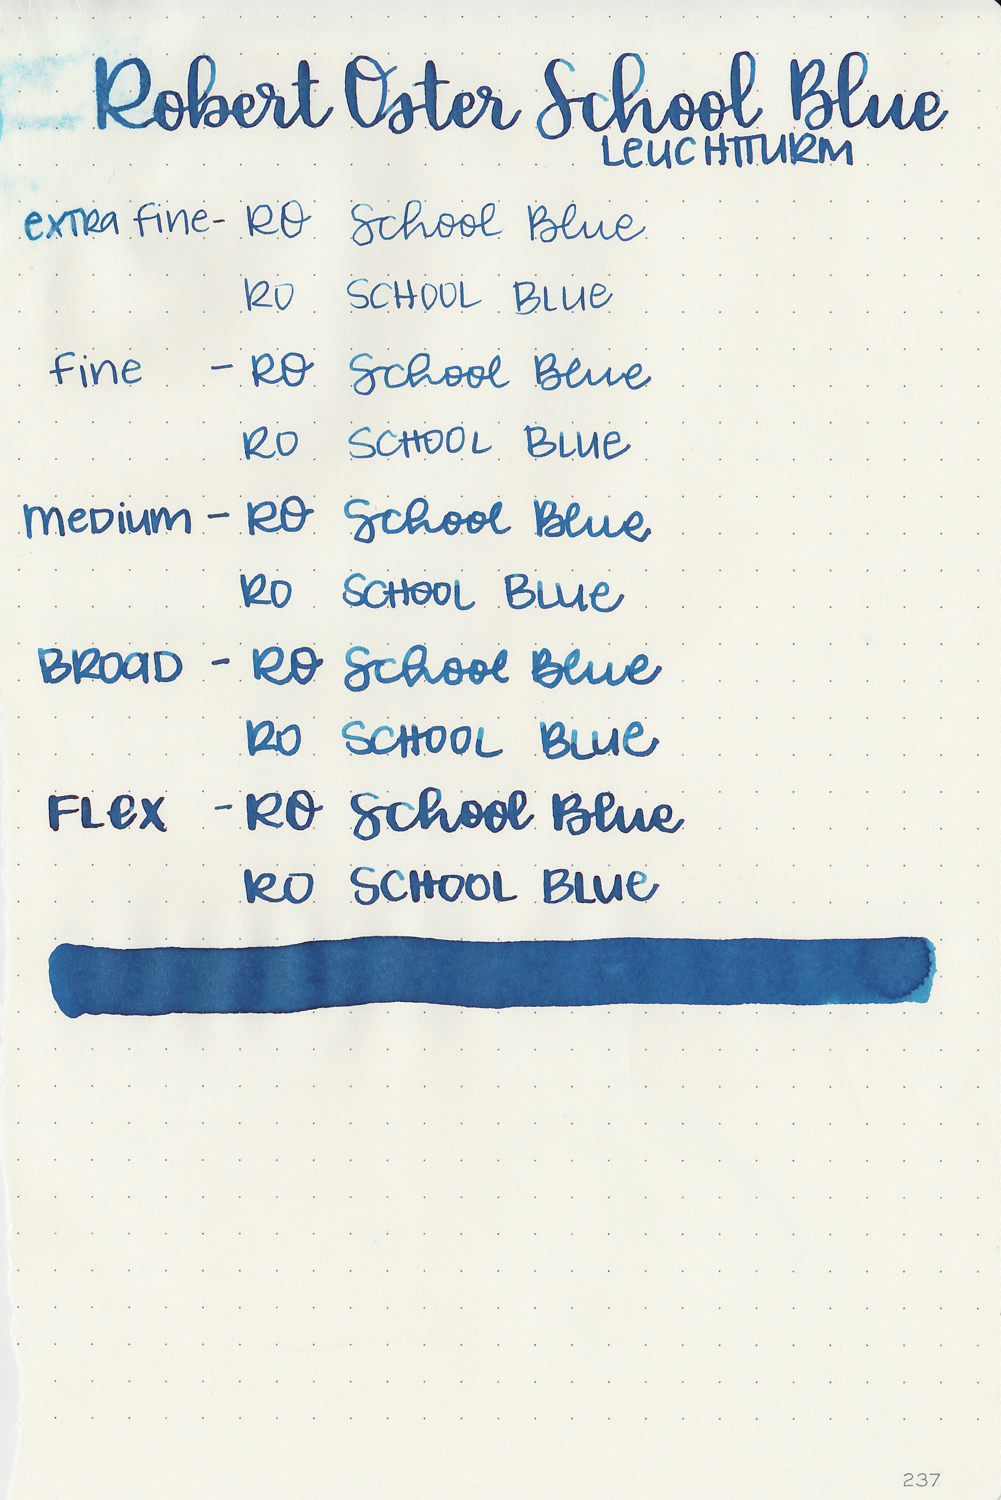 ro-school-blue-9.jpg